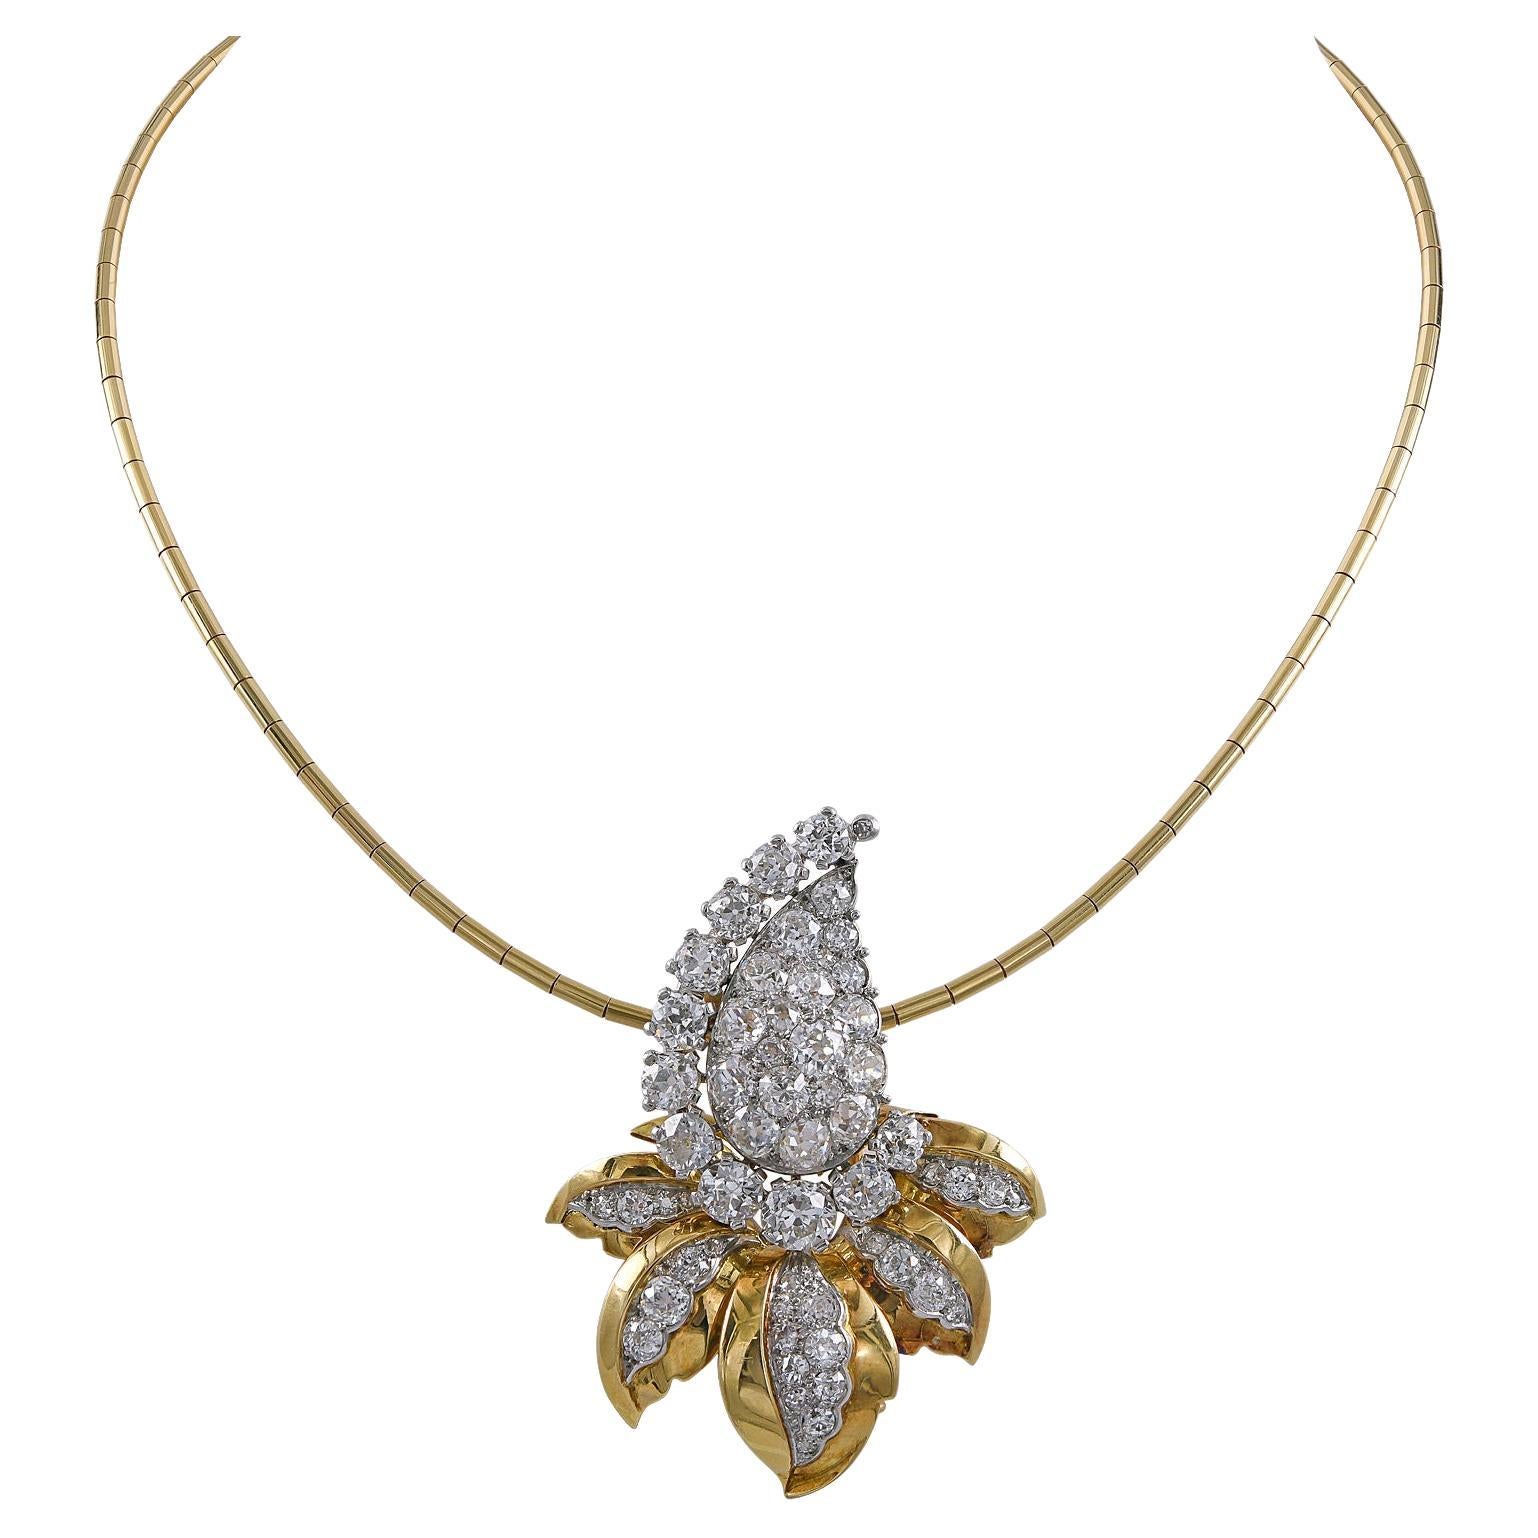 Cartier Vintage Diamond Brooch / Pendant on a Gold Collar